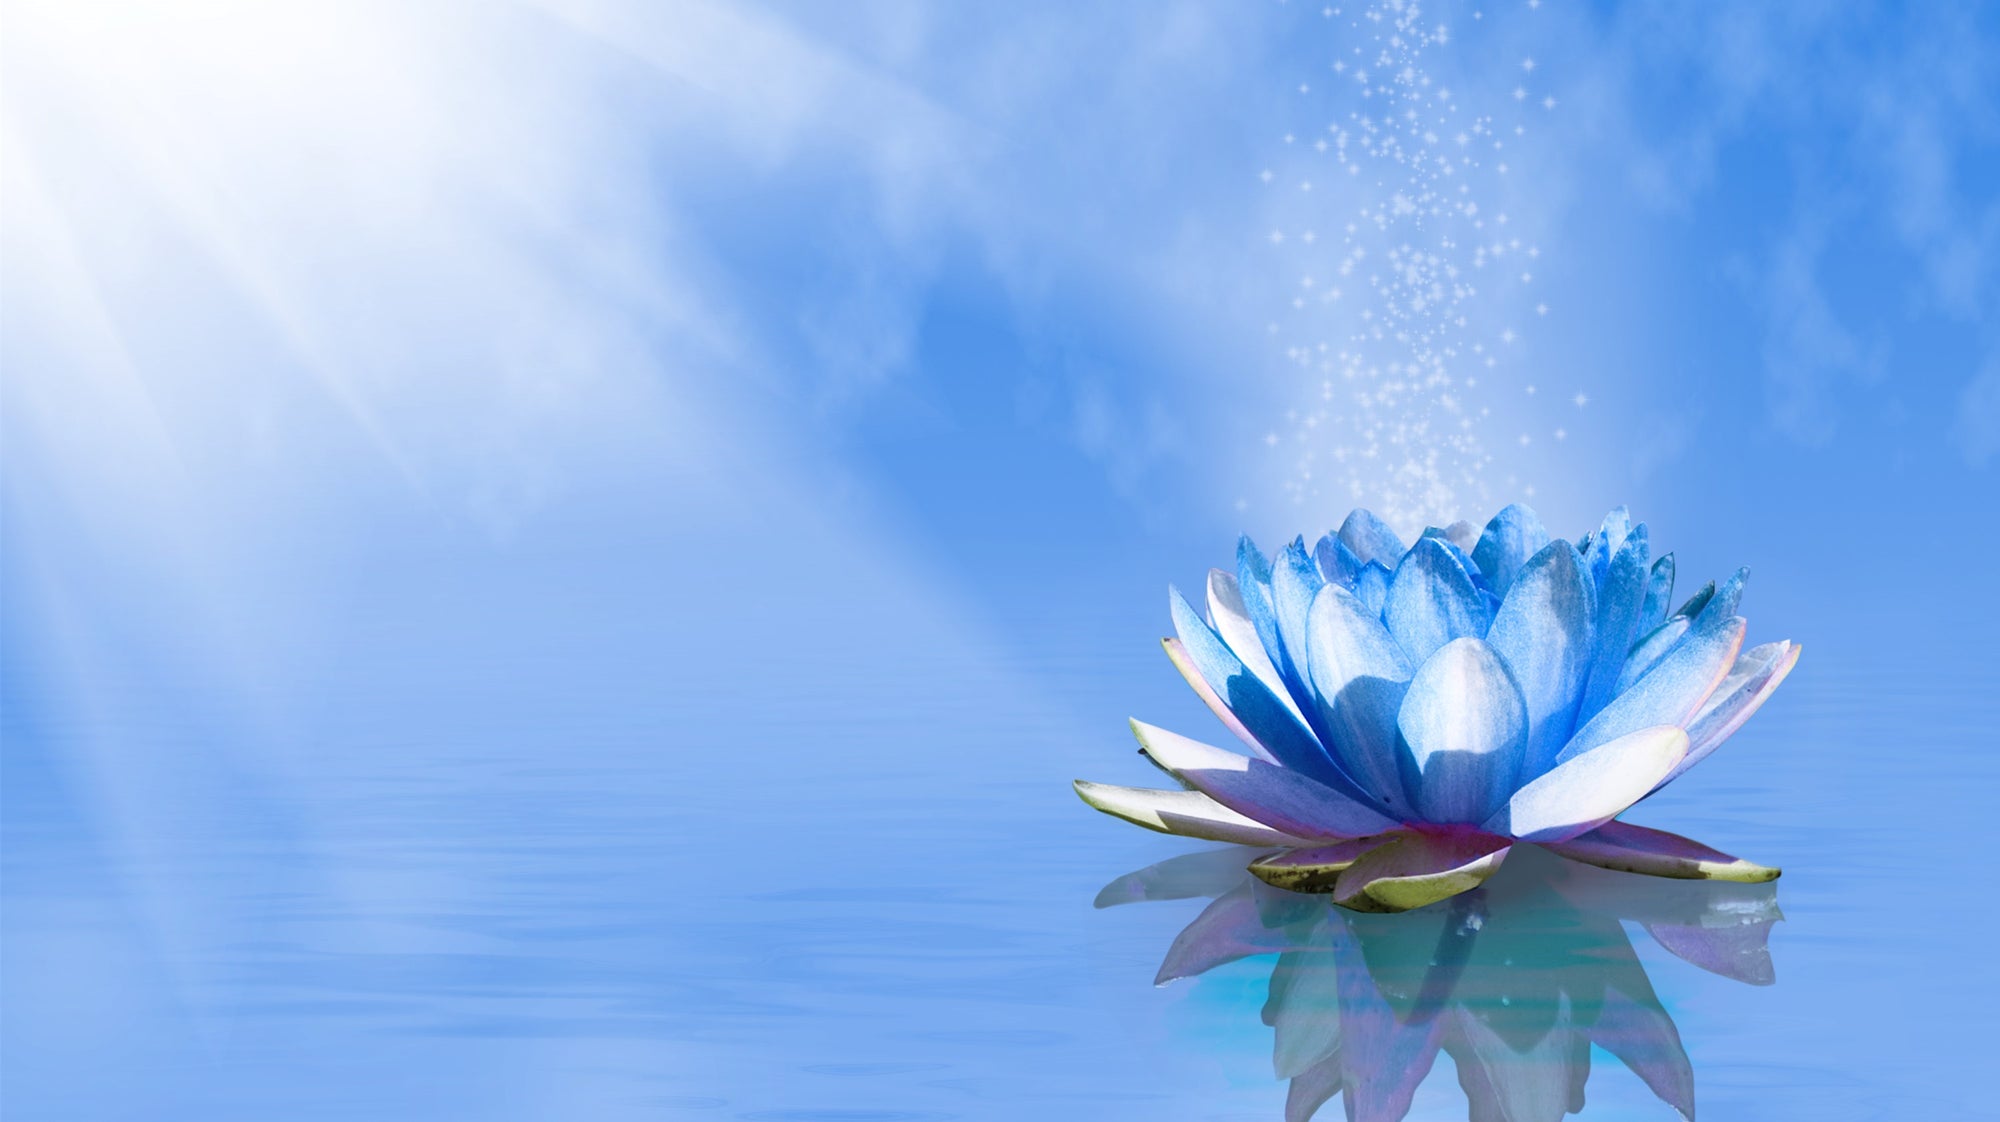 Lotus flower on blue background